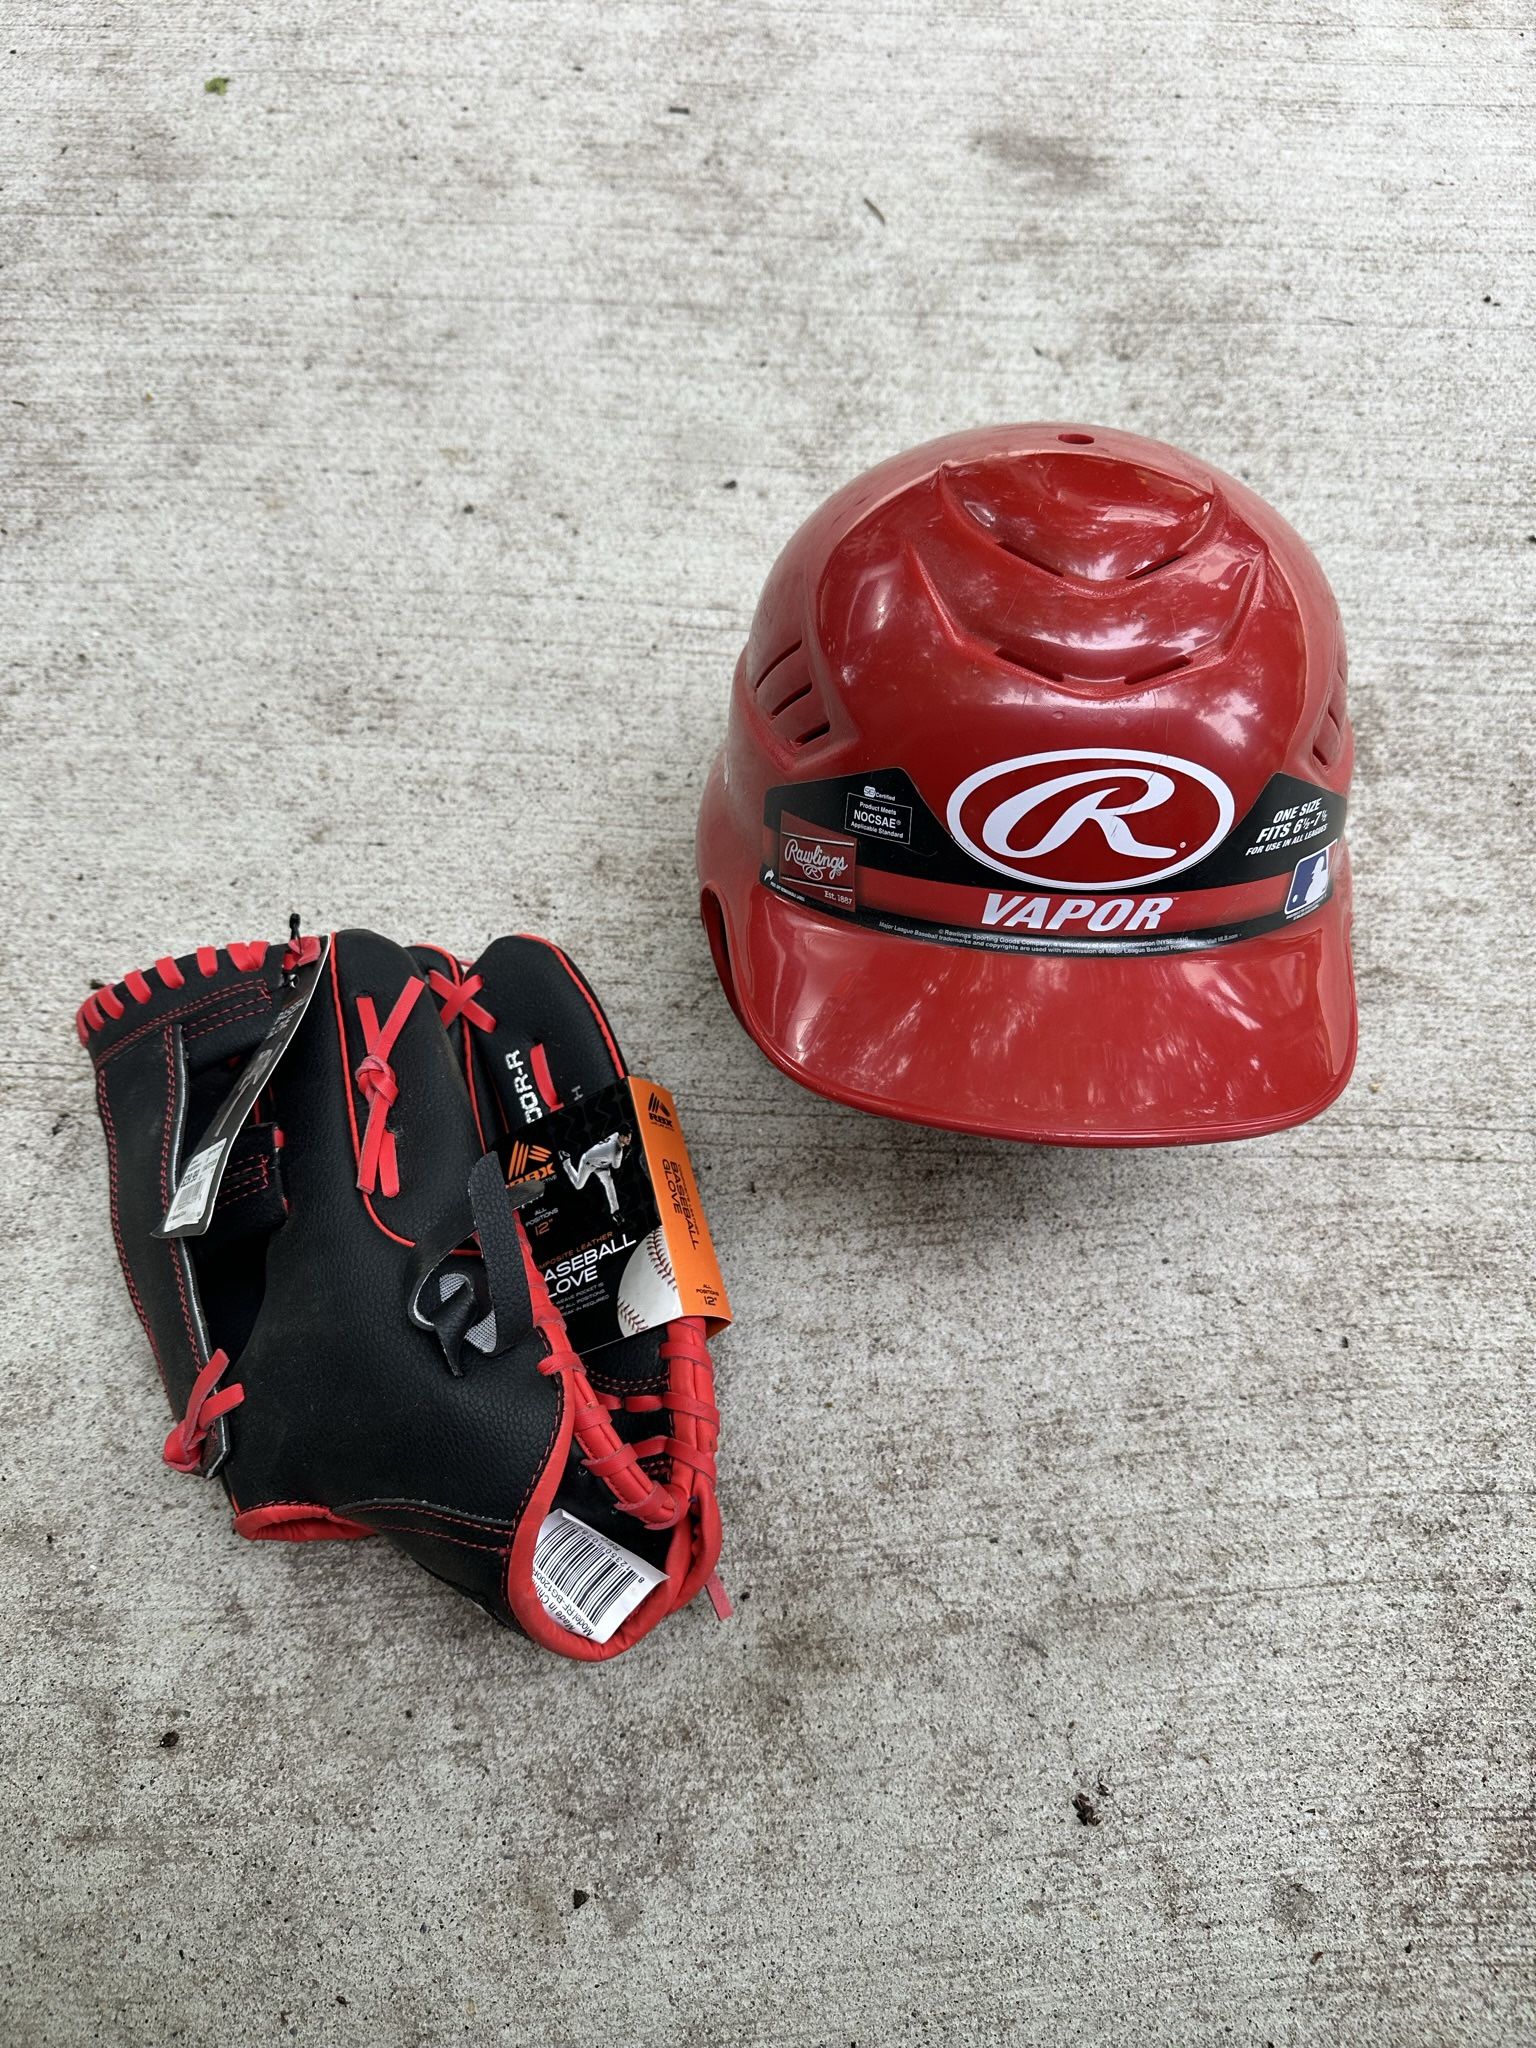 Kids Softball Rawlings Helmet and RBX Leather Baseball Glove